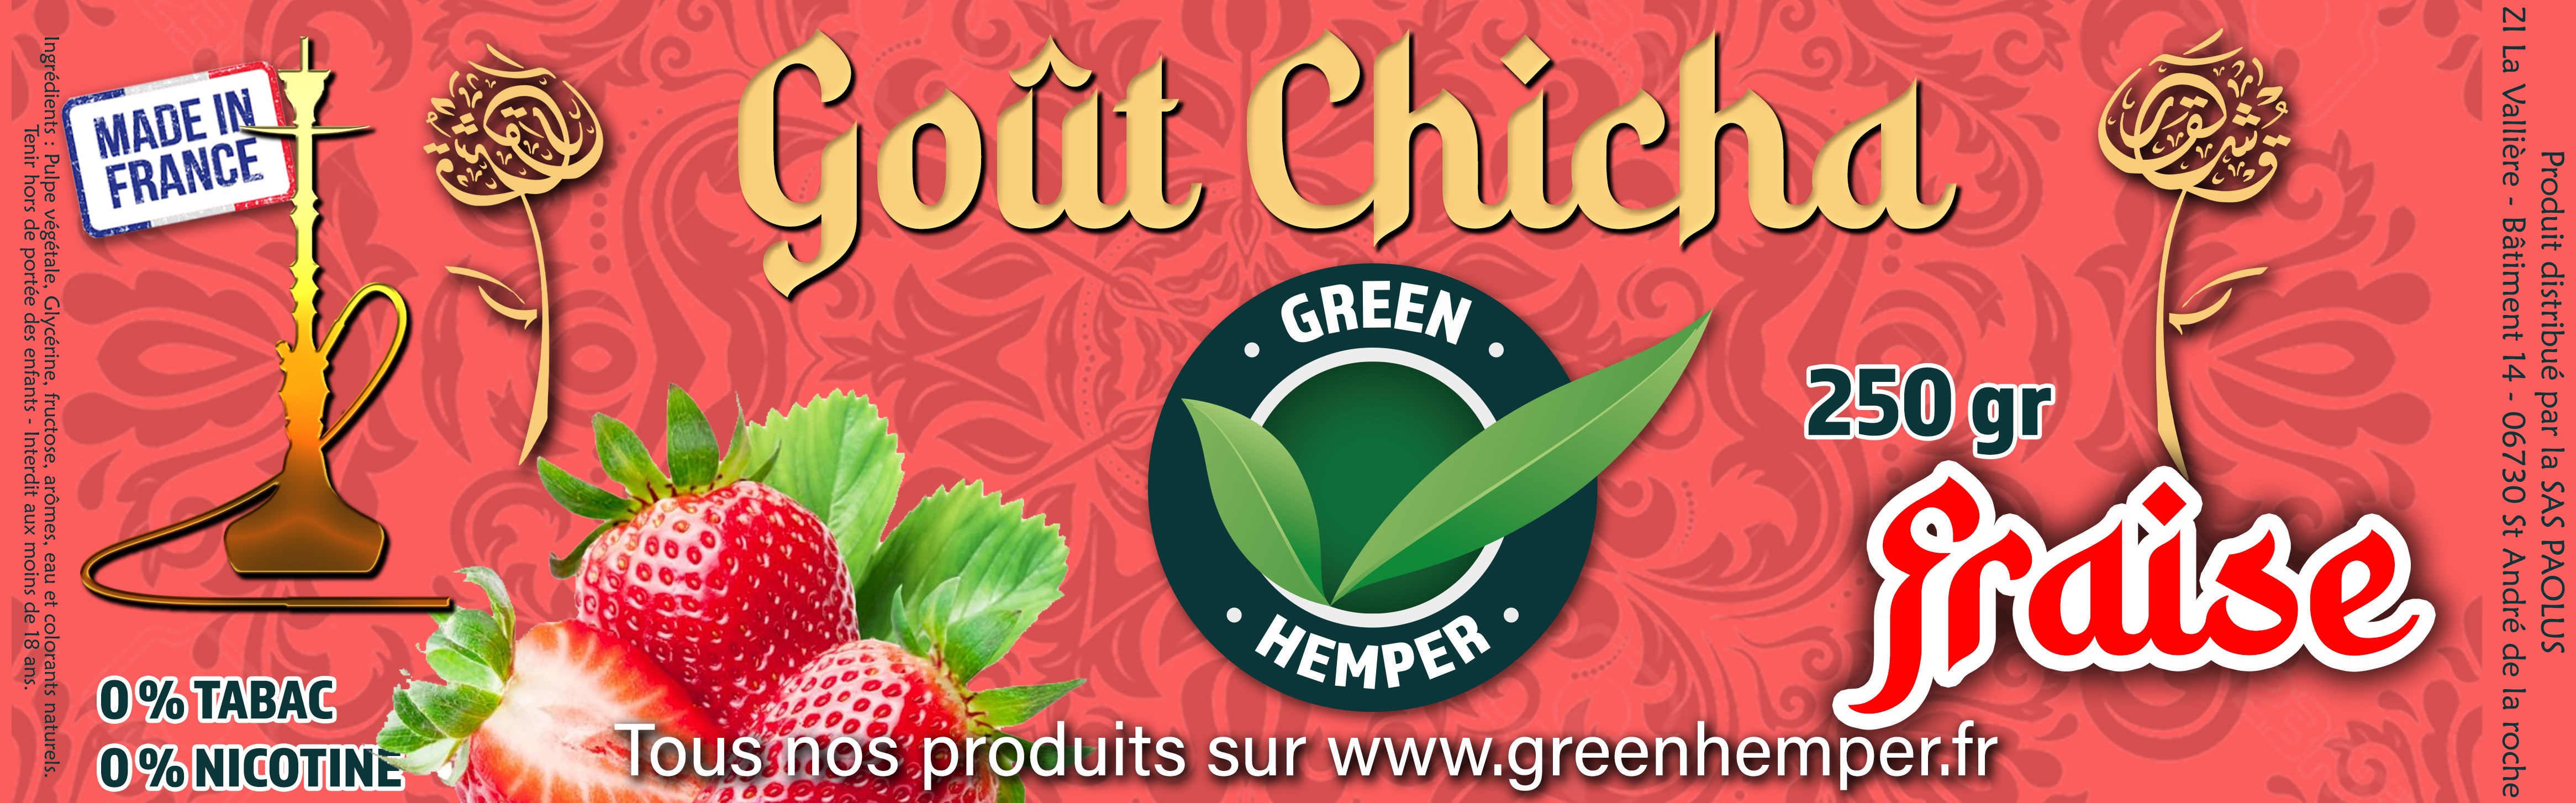 https://www.greenhemper.fr/Gouts-chicha/Gout-chicha-parfum-Fraise-250-Gr-221.jpg